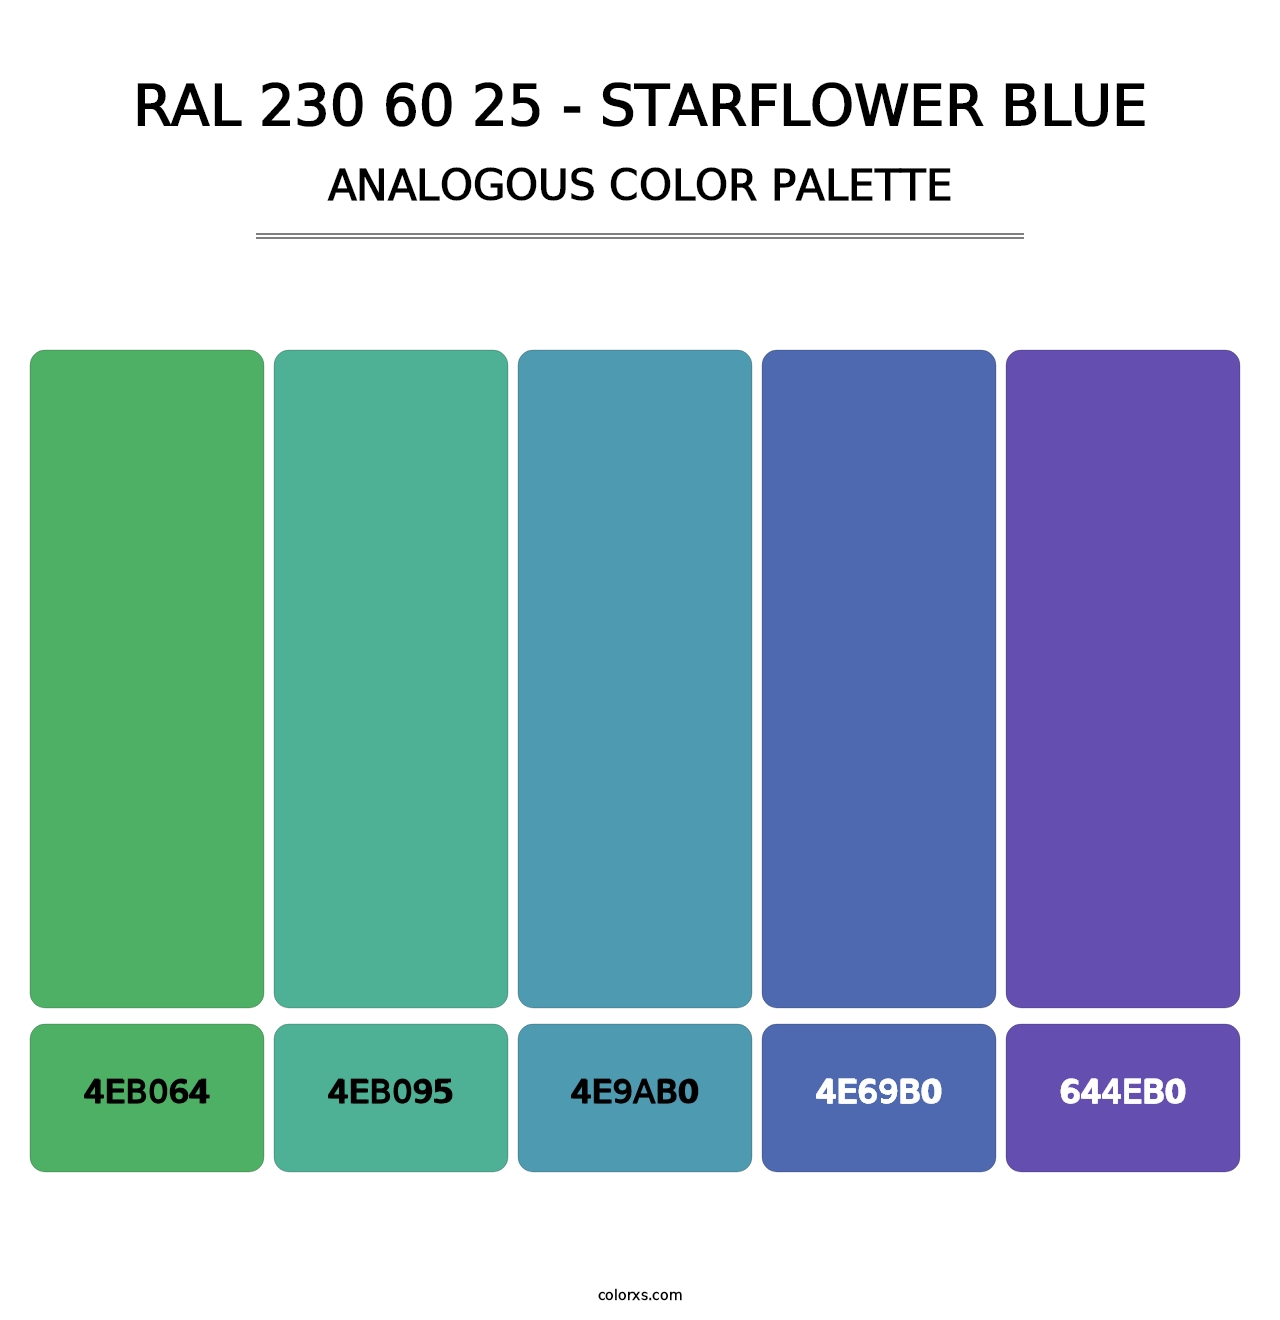 RAL 230 60 25 - Starflower Blue - Analogous Color Palette